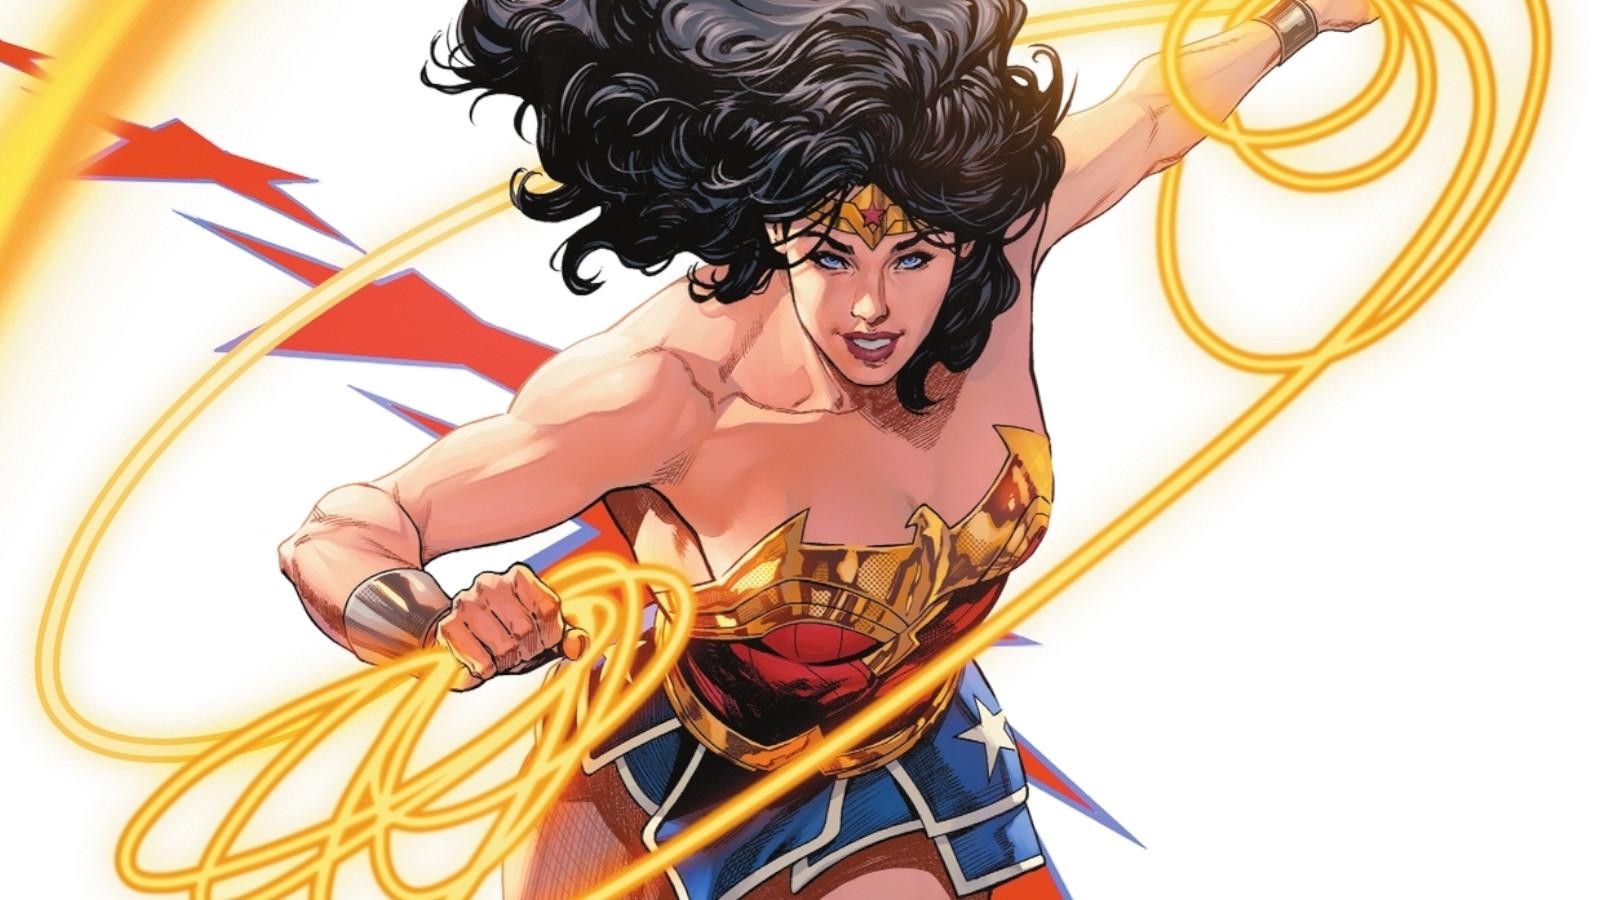 Wonder Woman #1 cover art